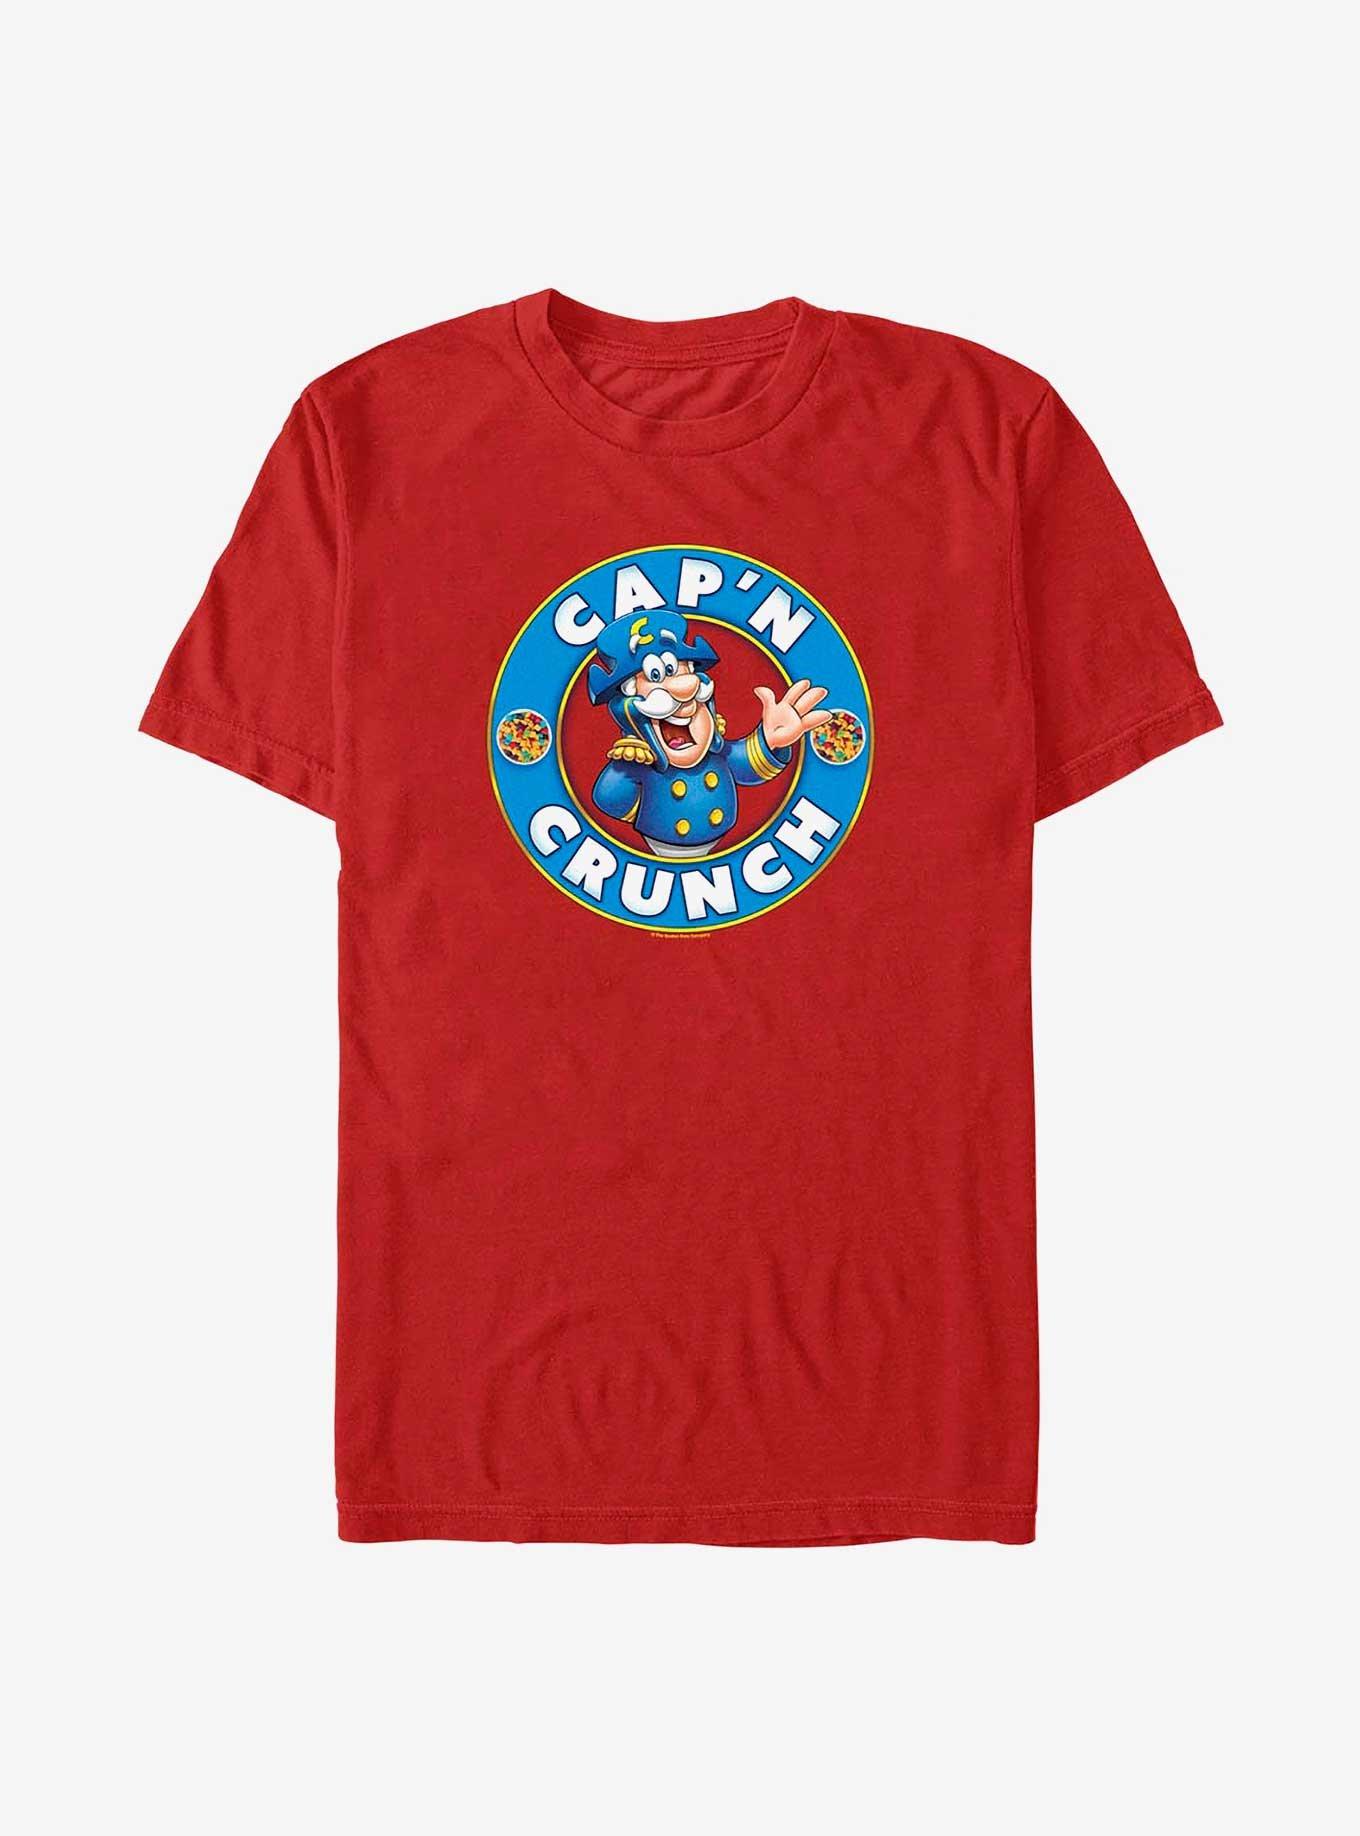 Capn Crunch Stamp T-Shirt